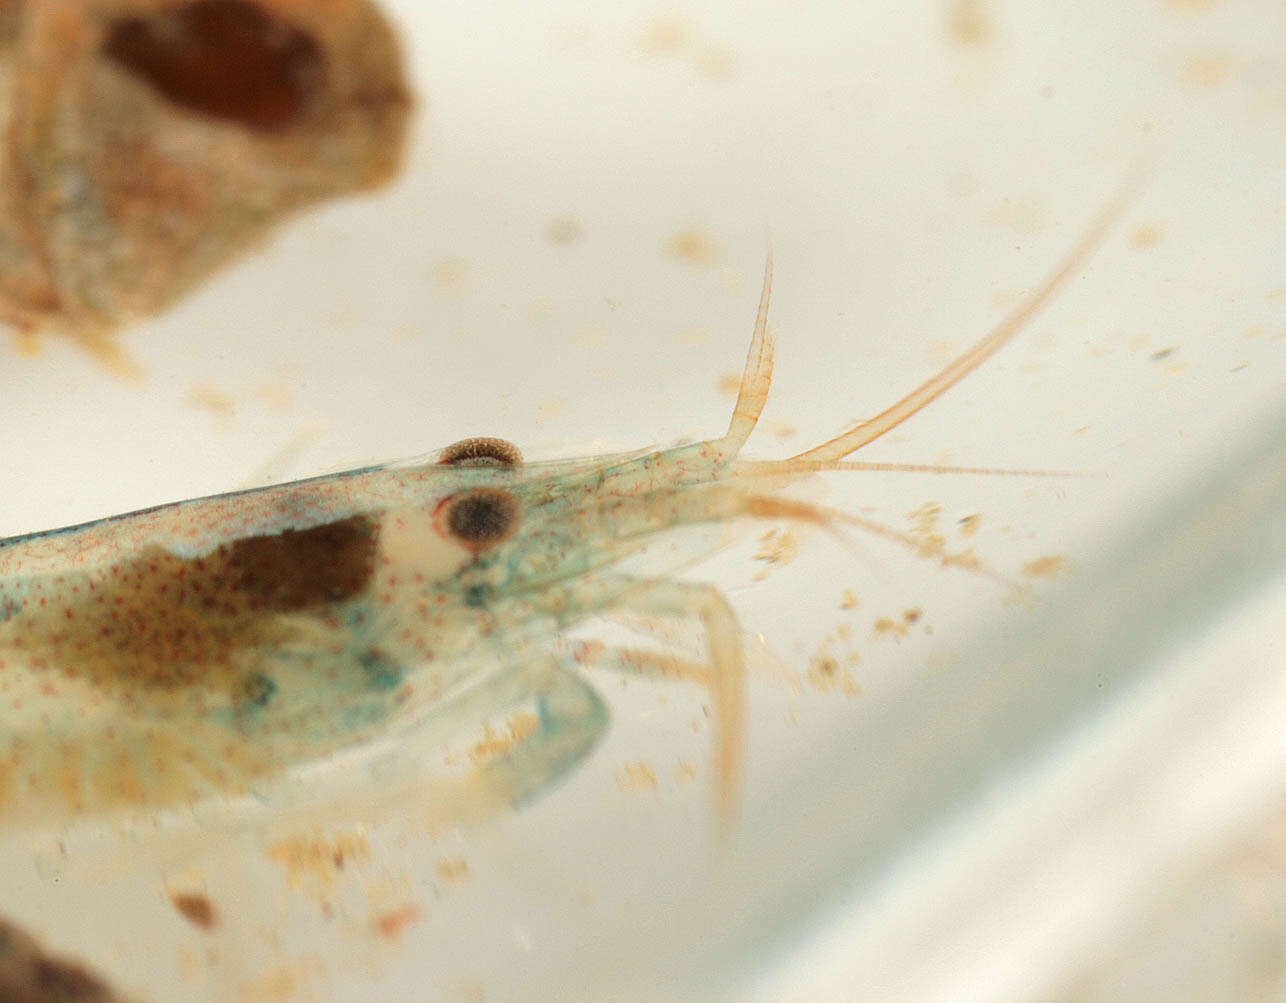 Image of hooded shrimp